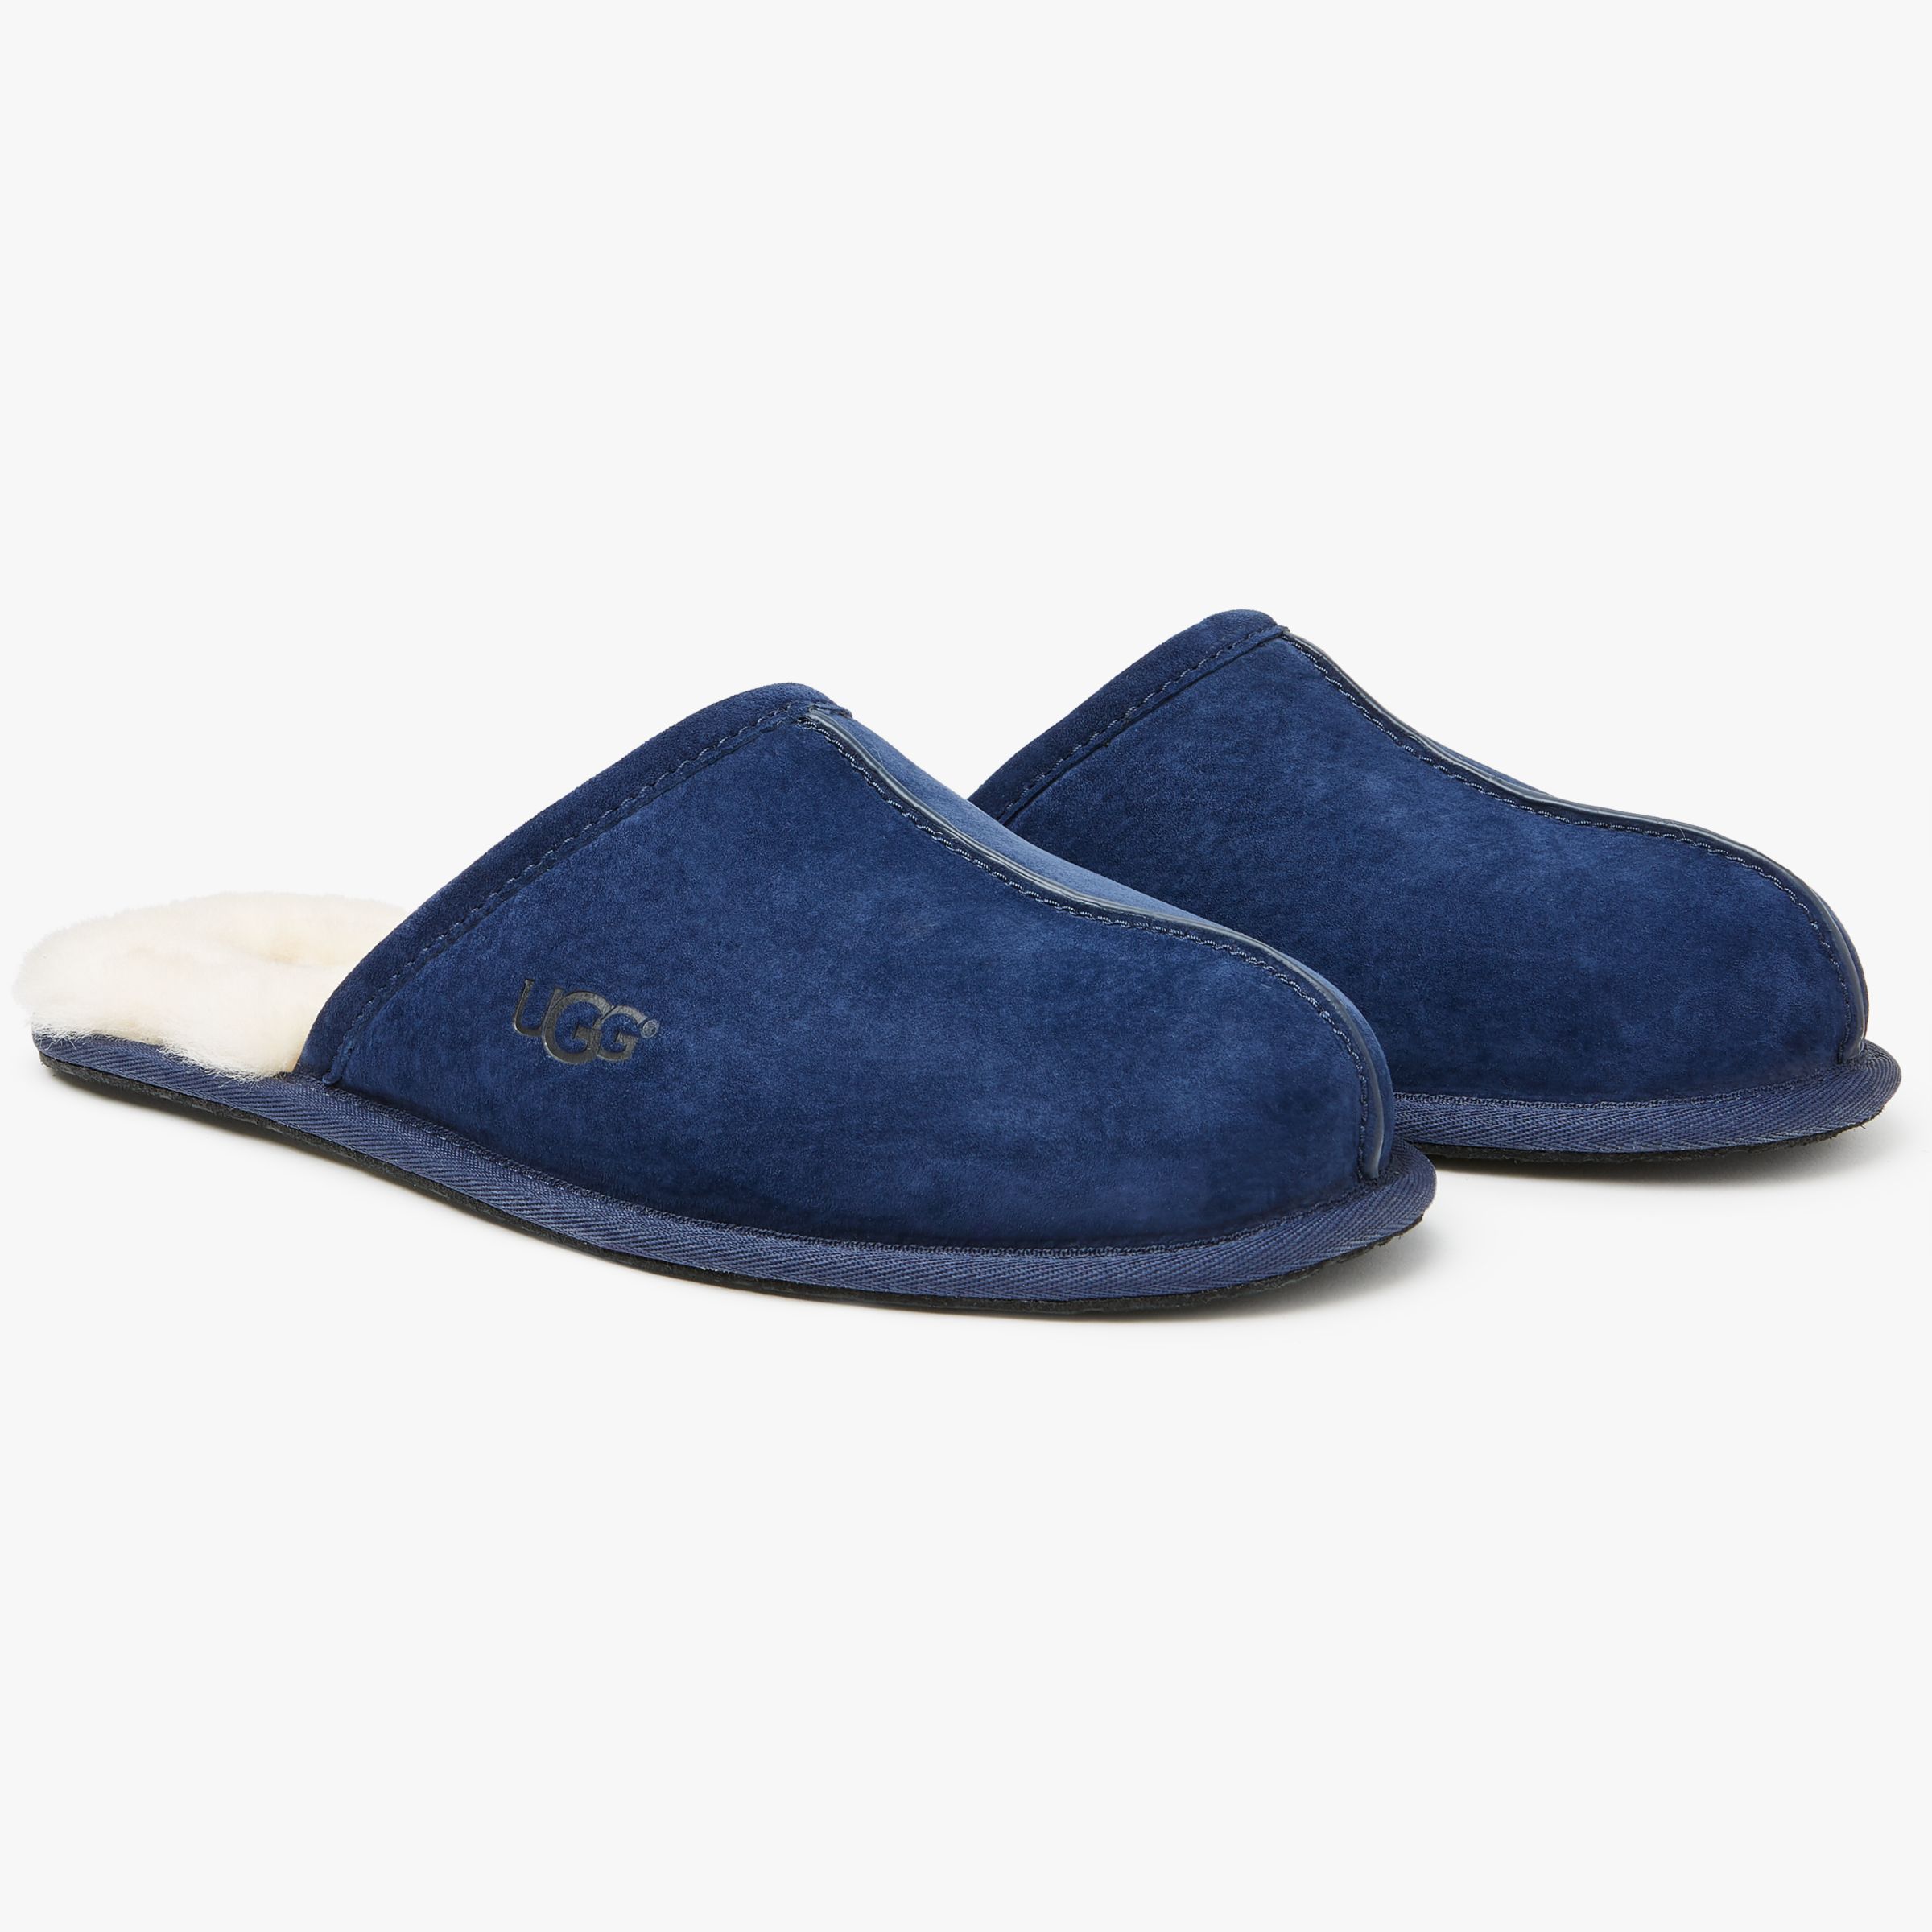 mens ugg slippers blue